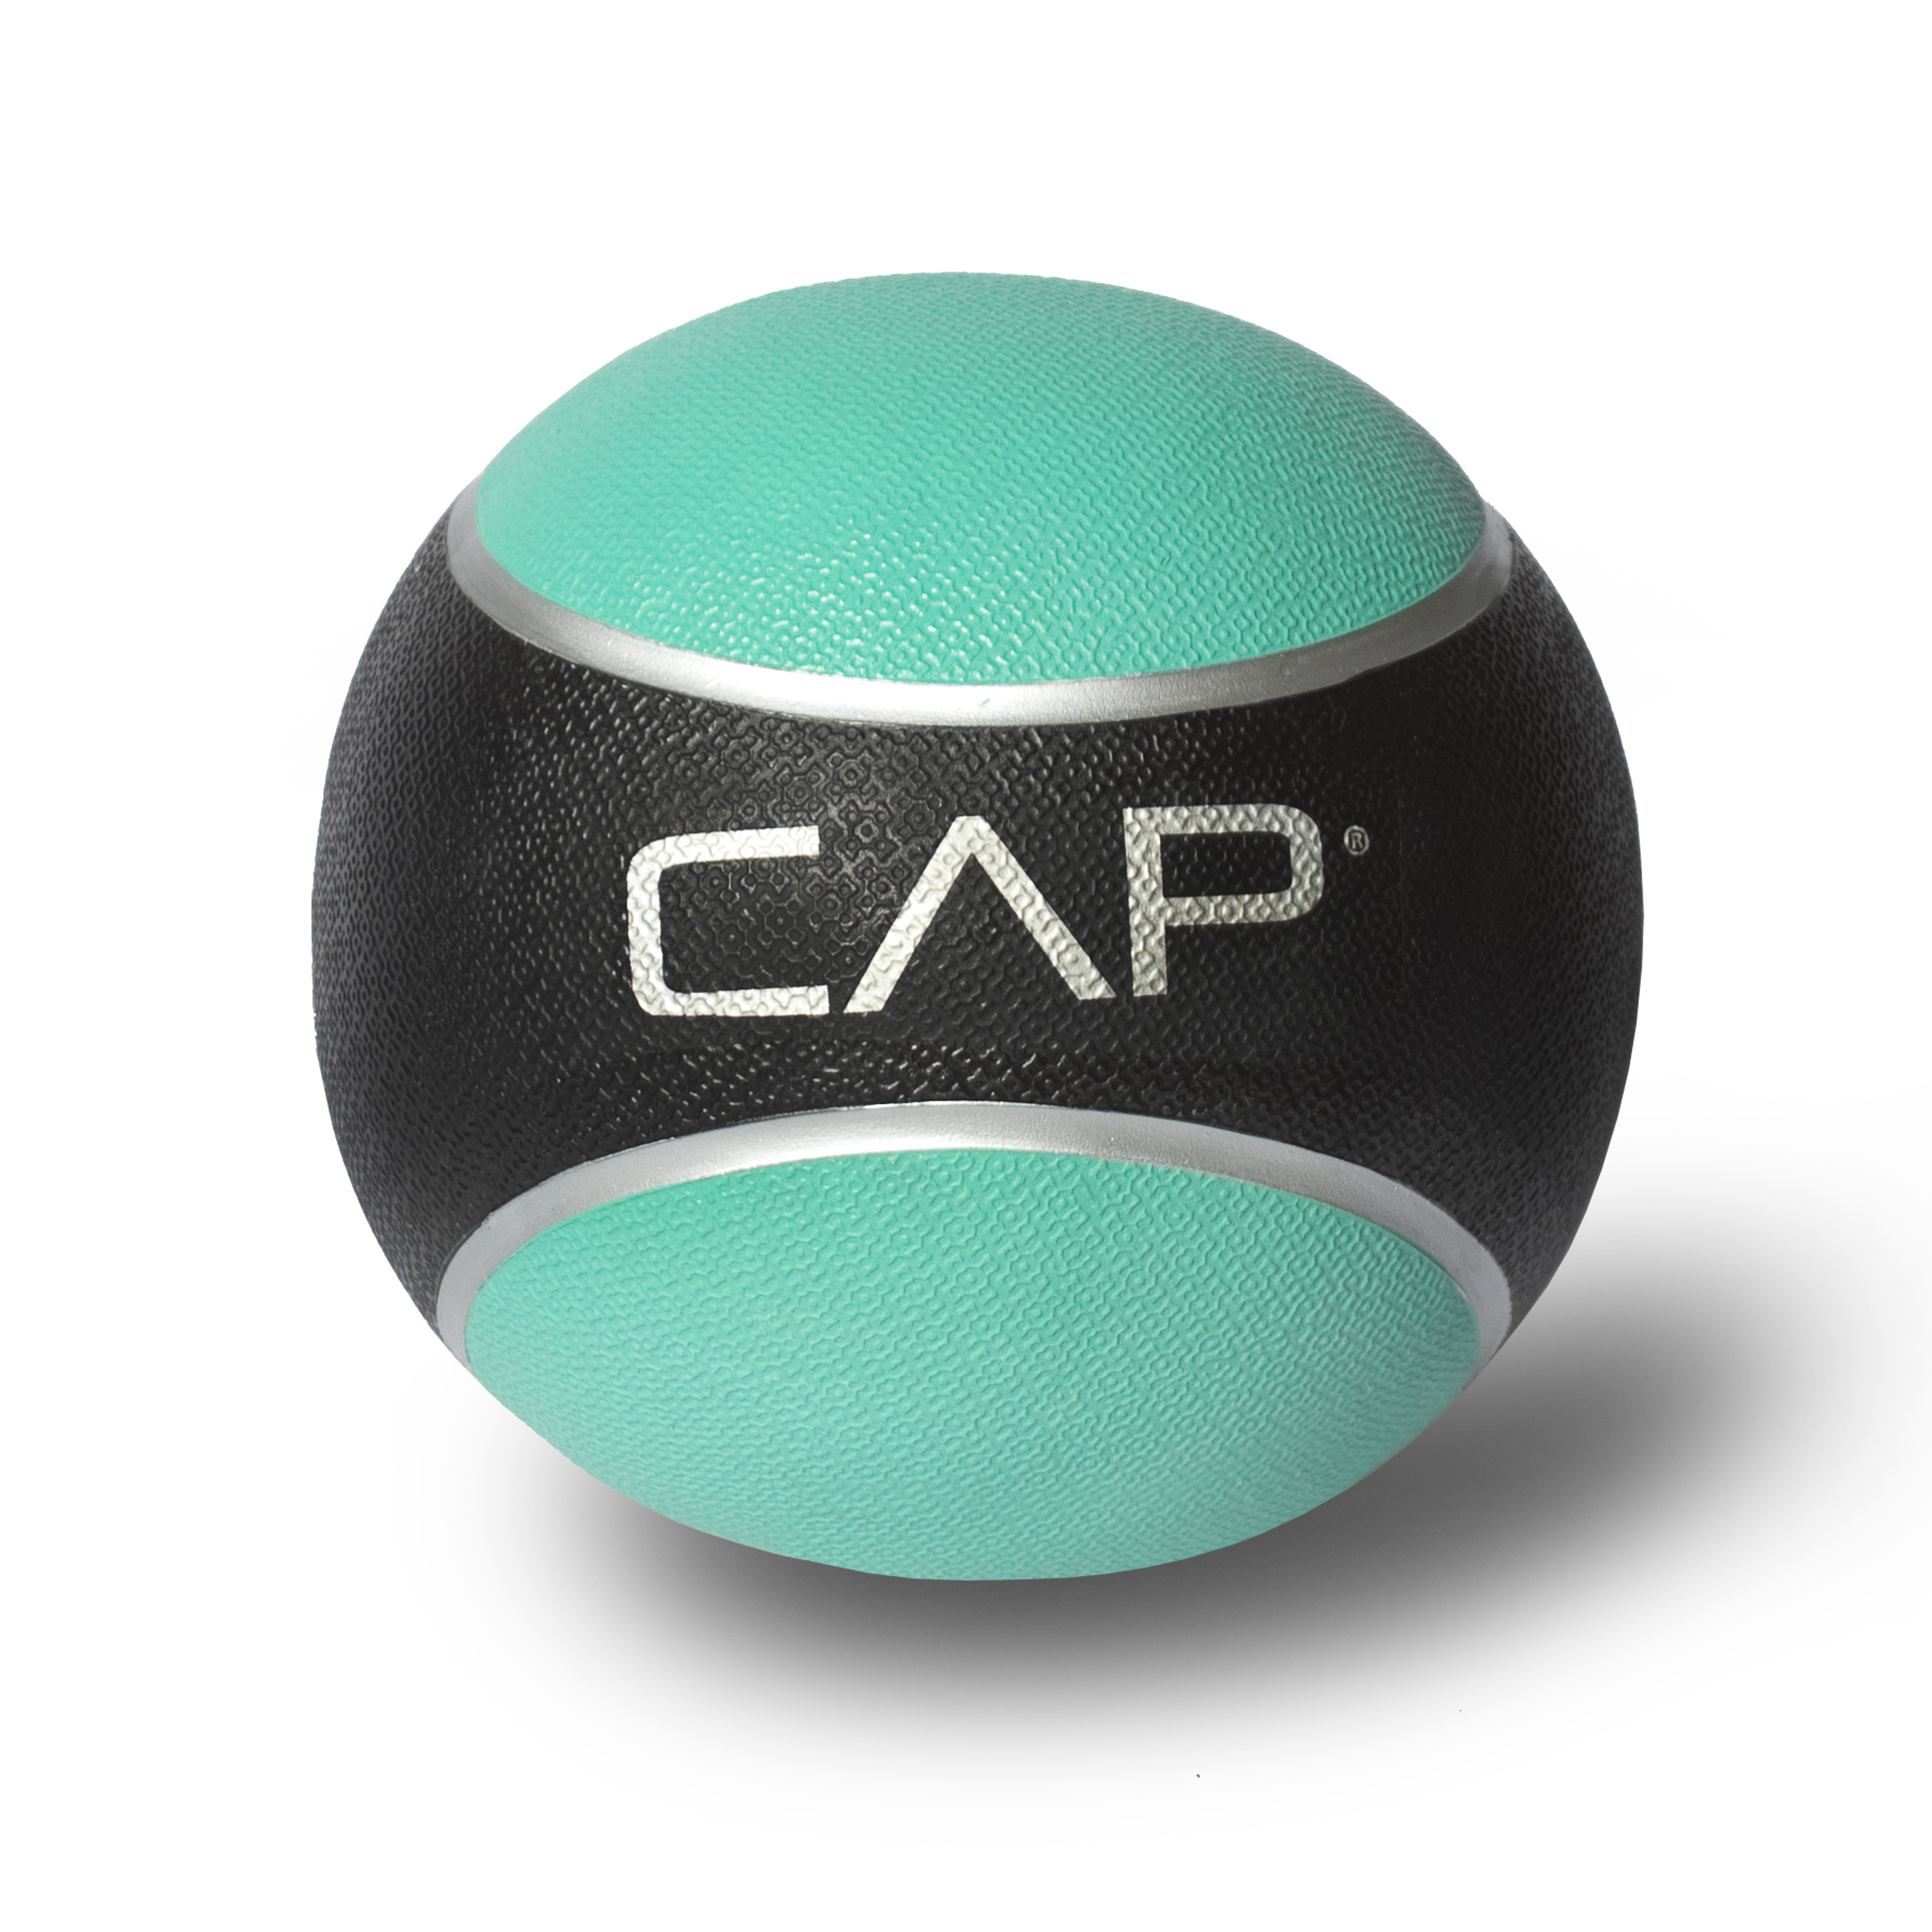 CAP Barbell Rubber Medicine Ball, 2lb - image 1 of 5